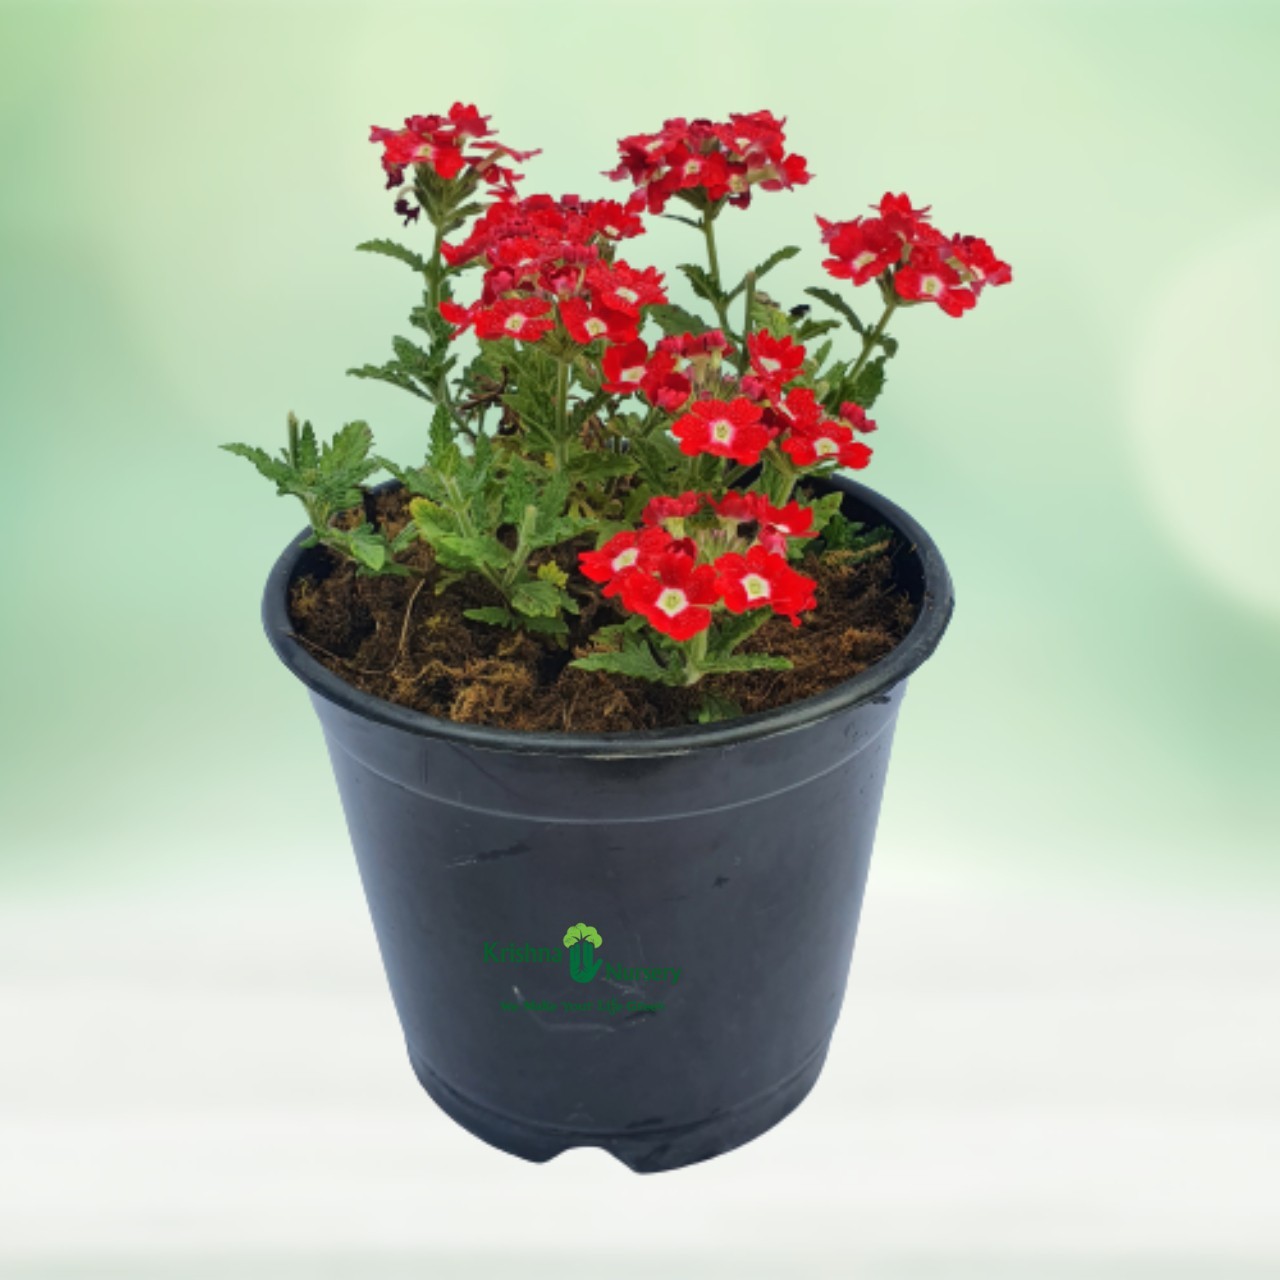 Verbena Flower Plant - 6 Inch - Black Pot